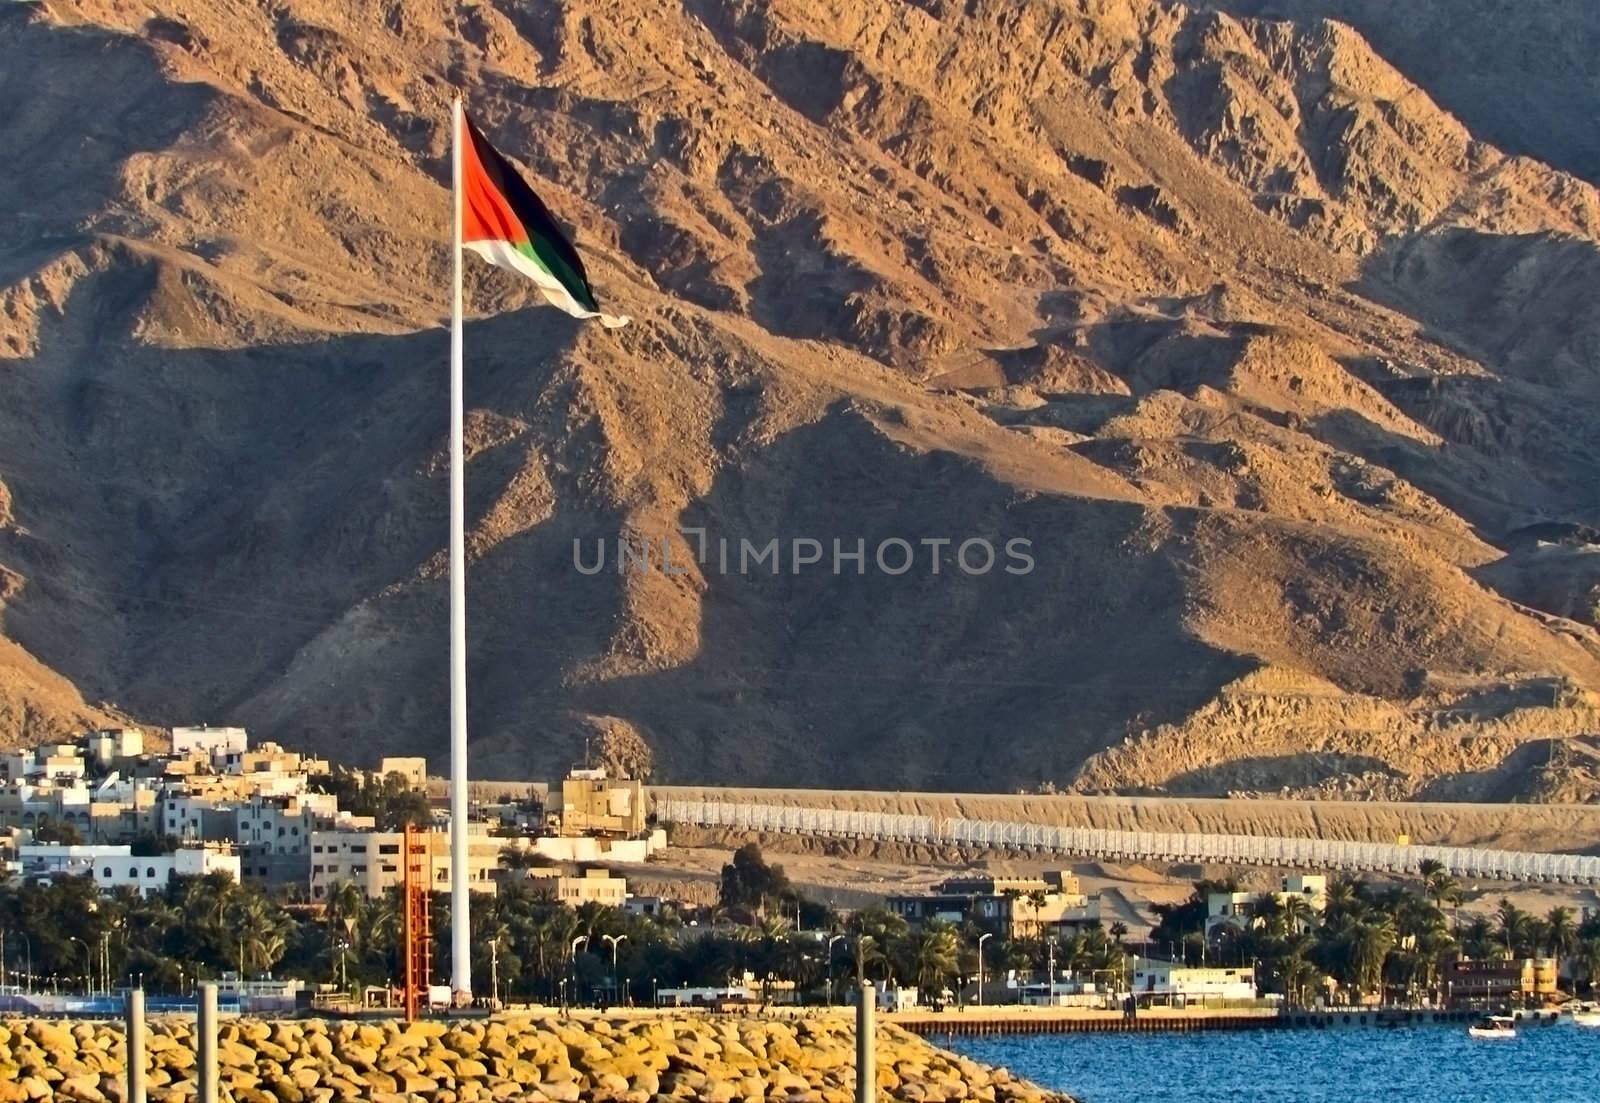 Giant Flag in the Middle East, Aqaba, Jordan by Gorshkov13